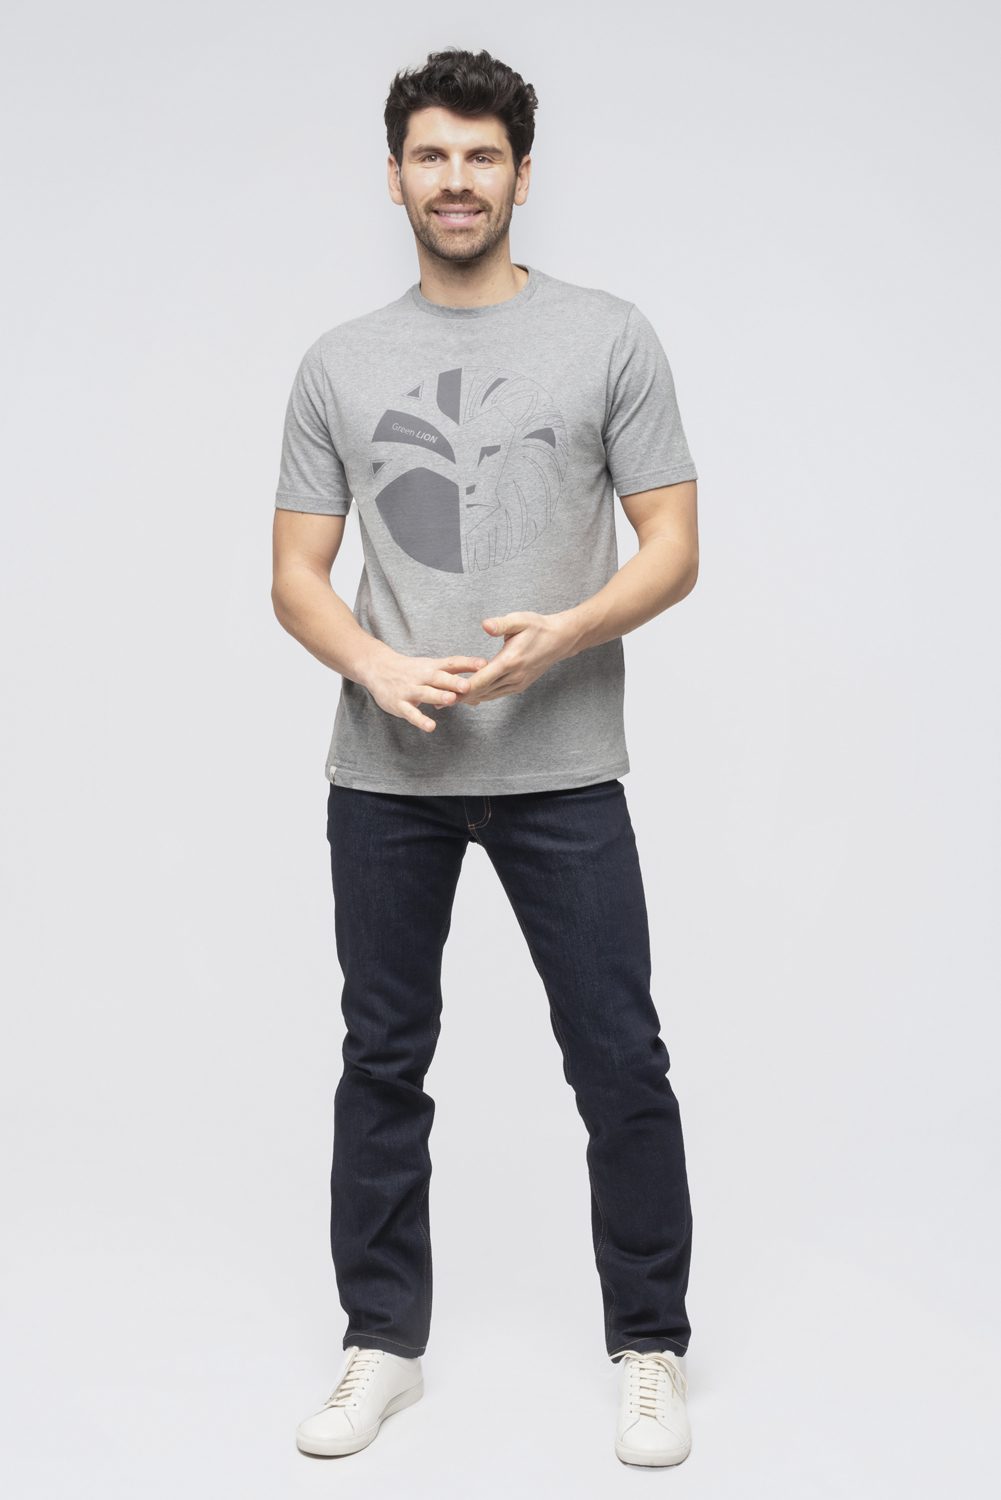 LÉO - T-shirt 100% Coton BIO - GRIS